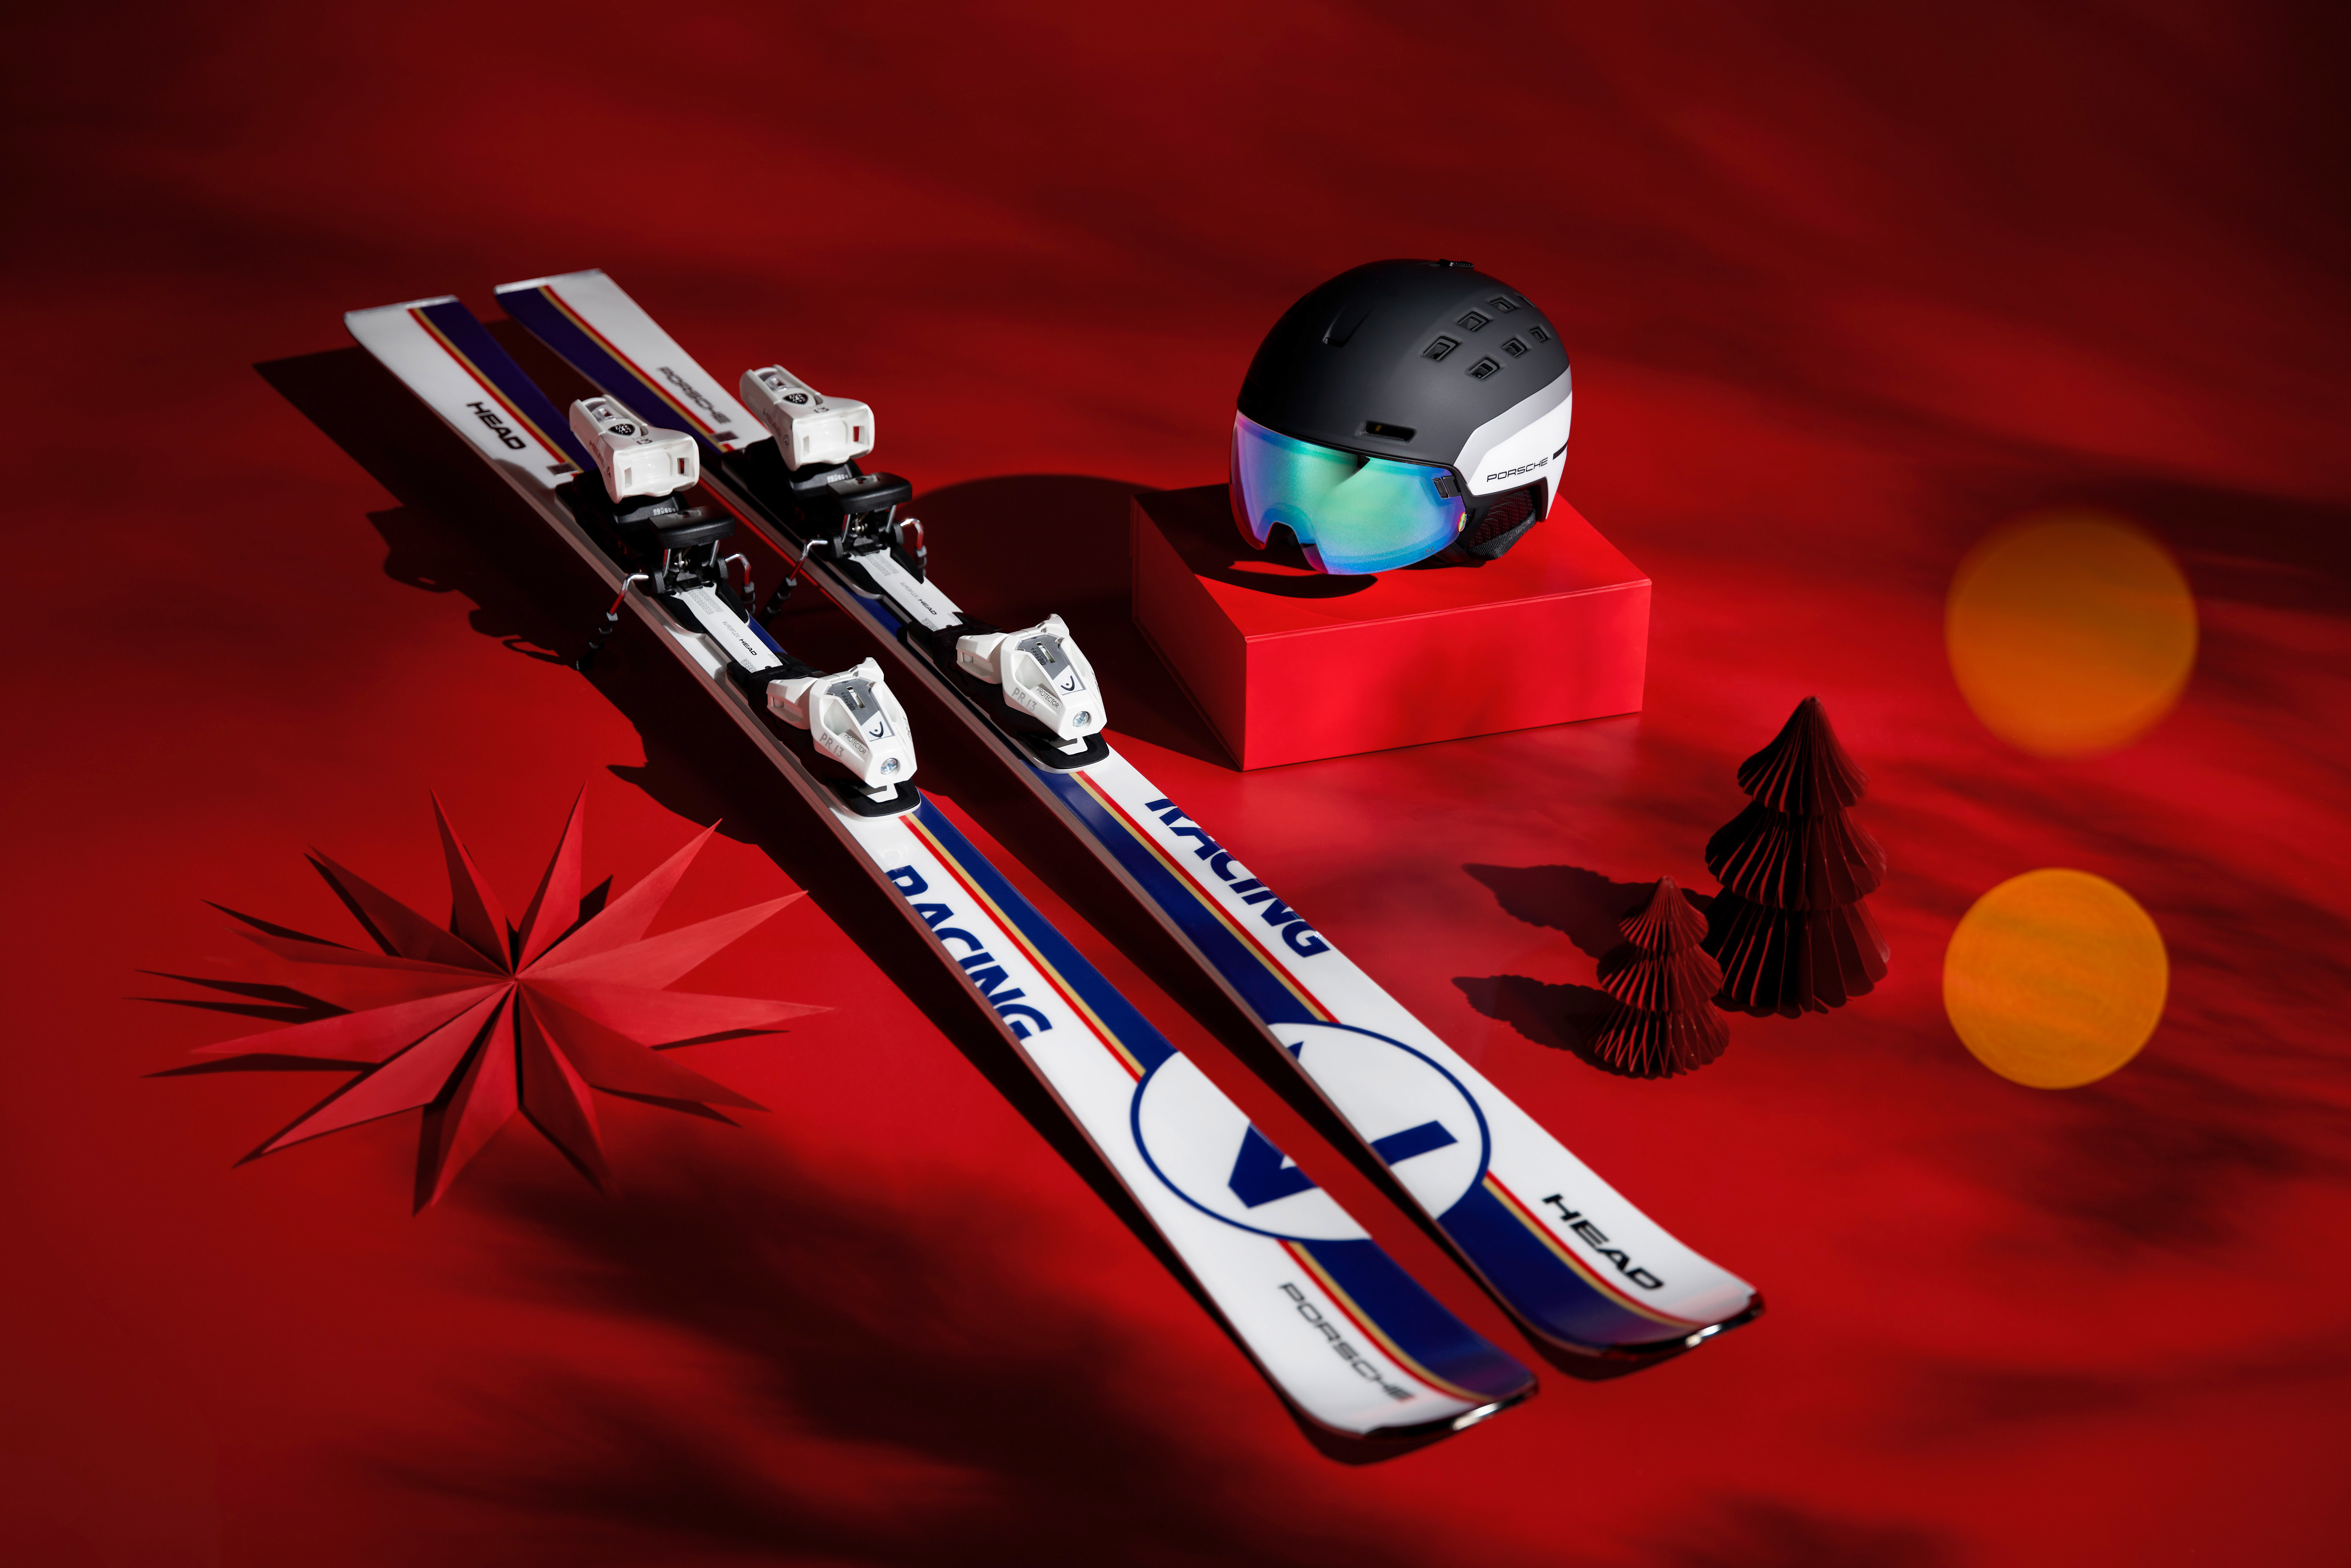 Porsche x HEAD skis and helmet on red background